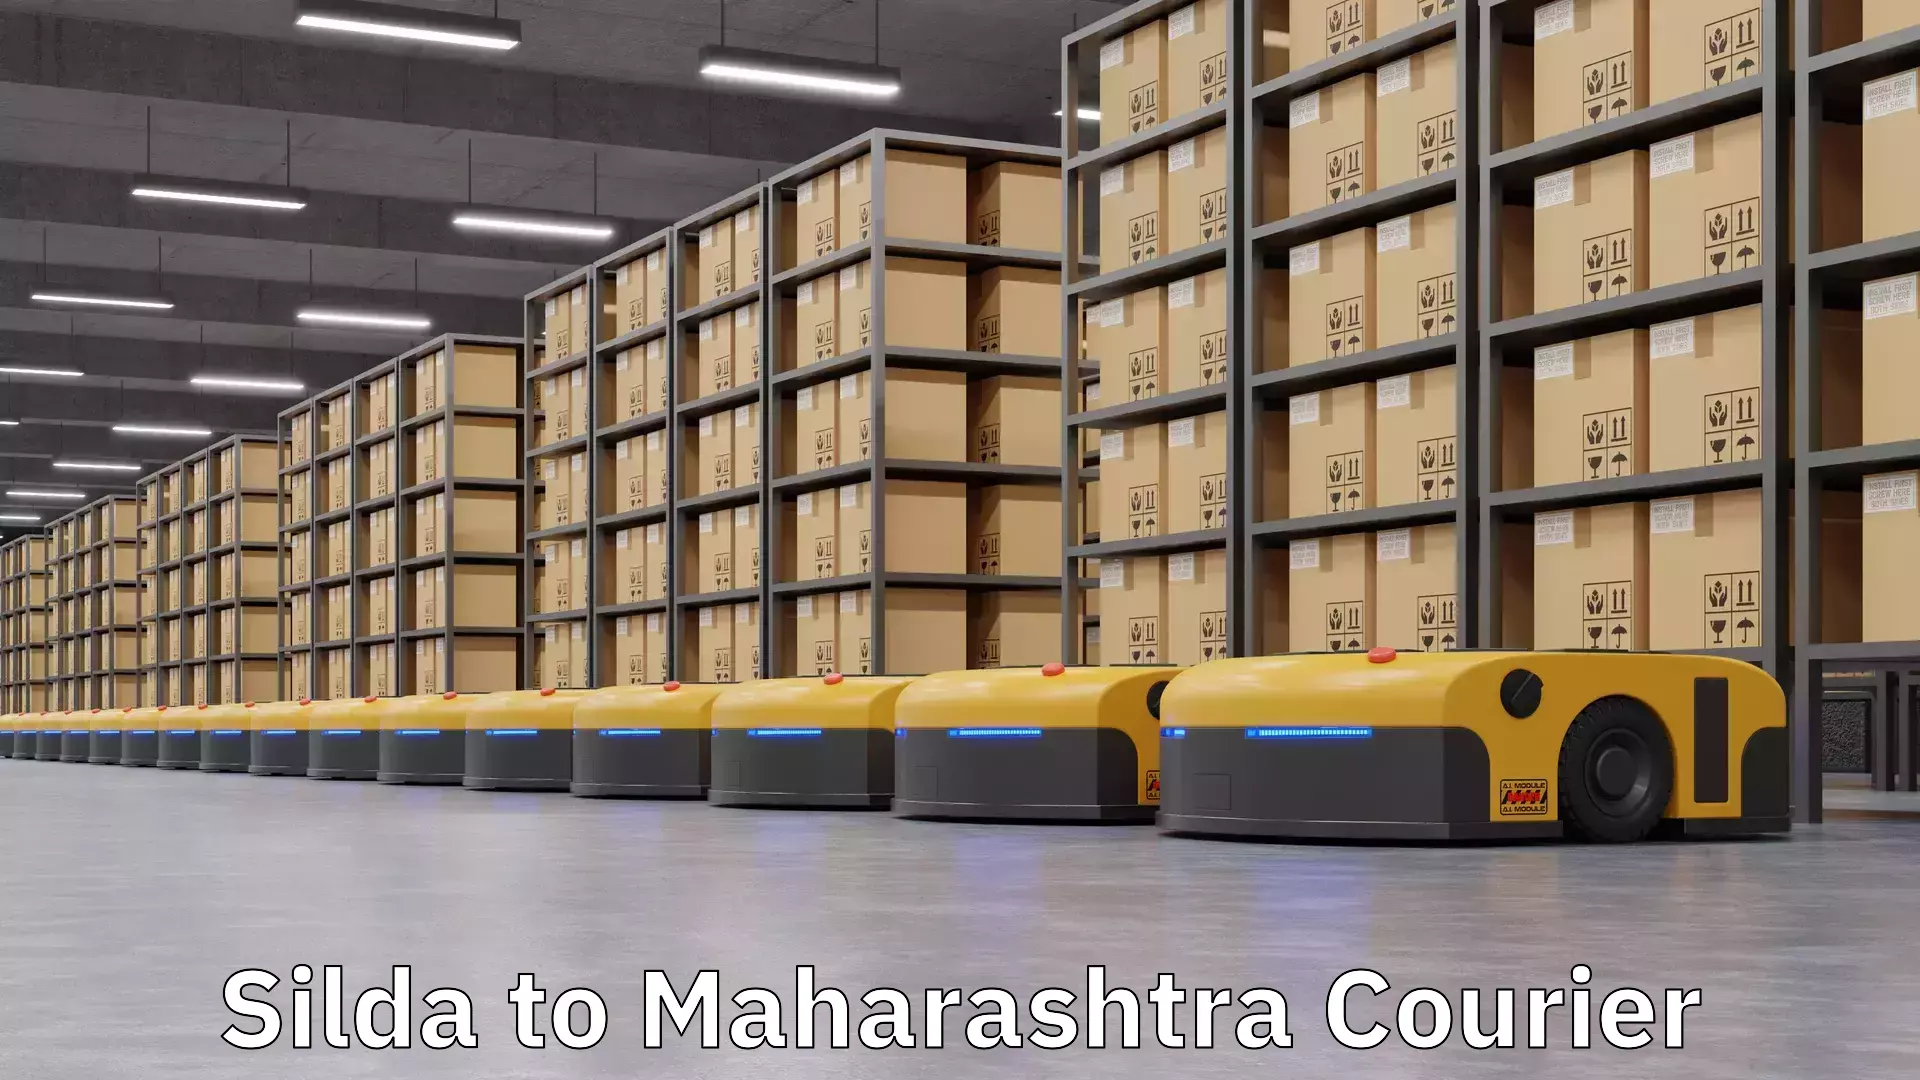 Specialized shipment handling Silda to Maharashtra